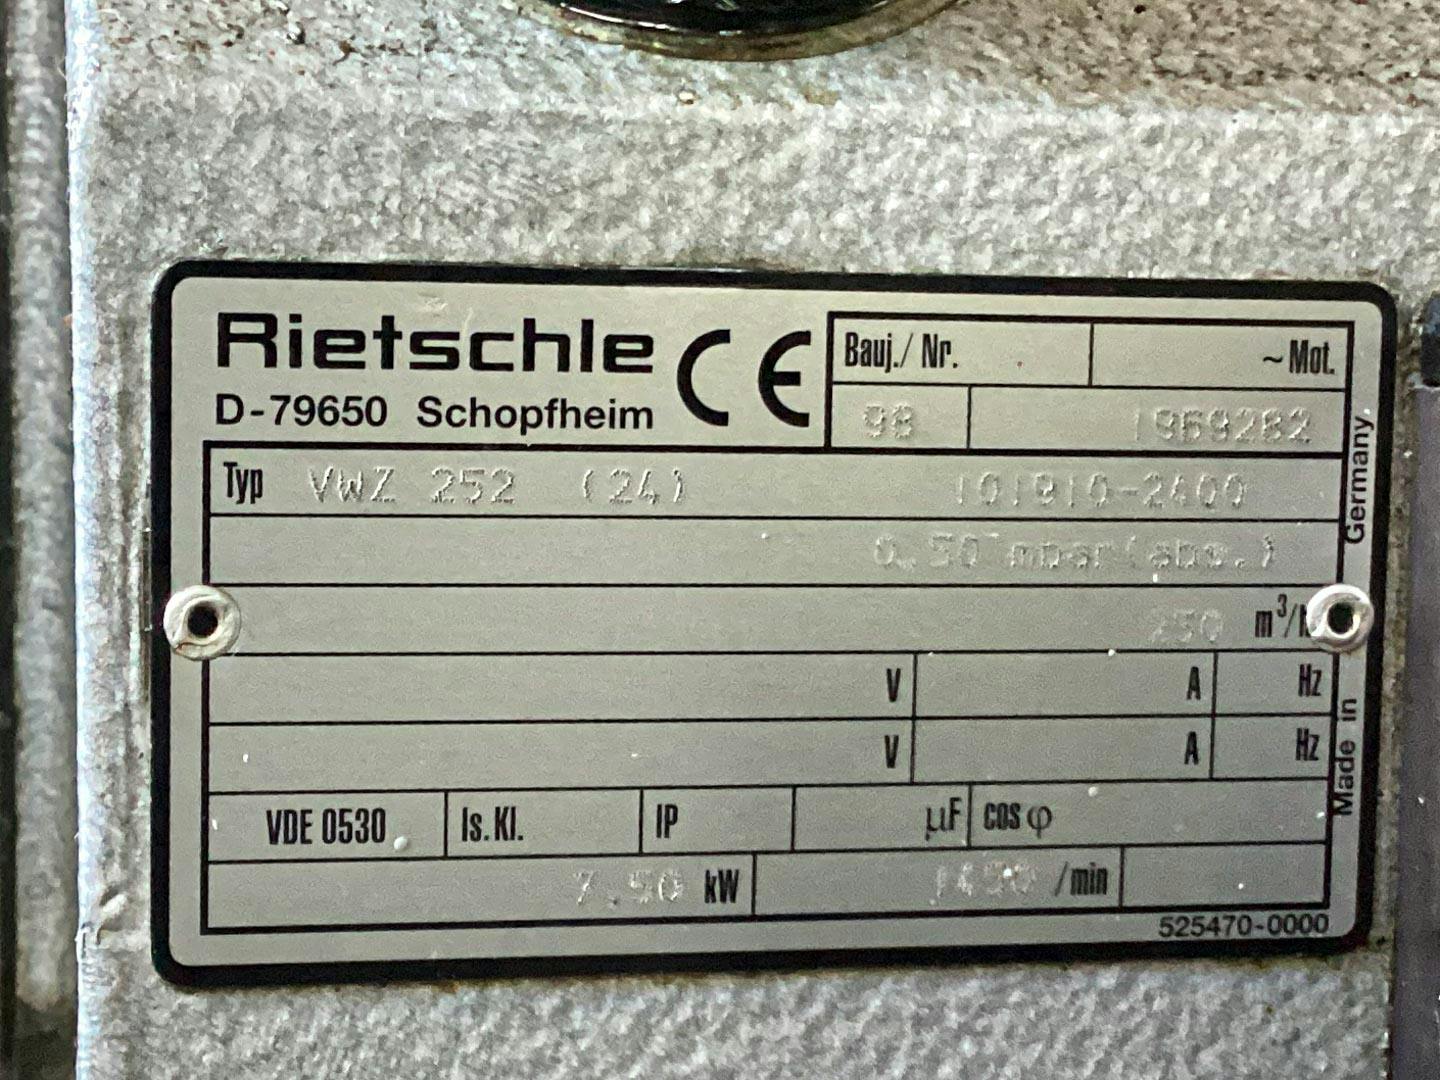 Rietschle VWZ 252 (24) - Vacuumpomp - image 7